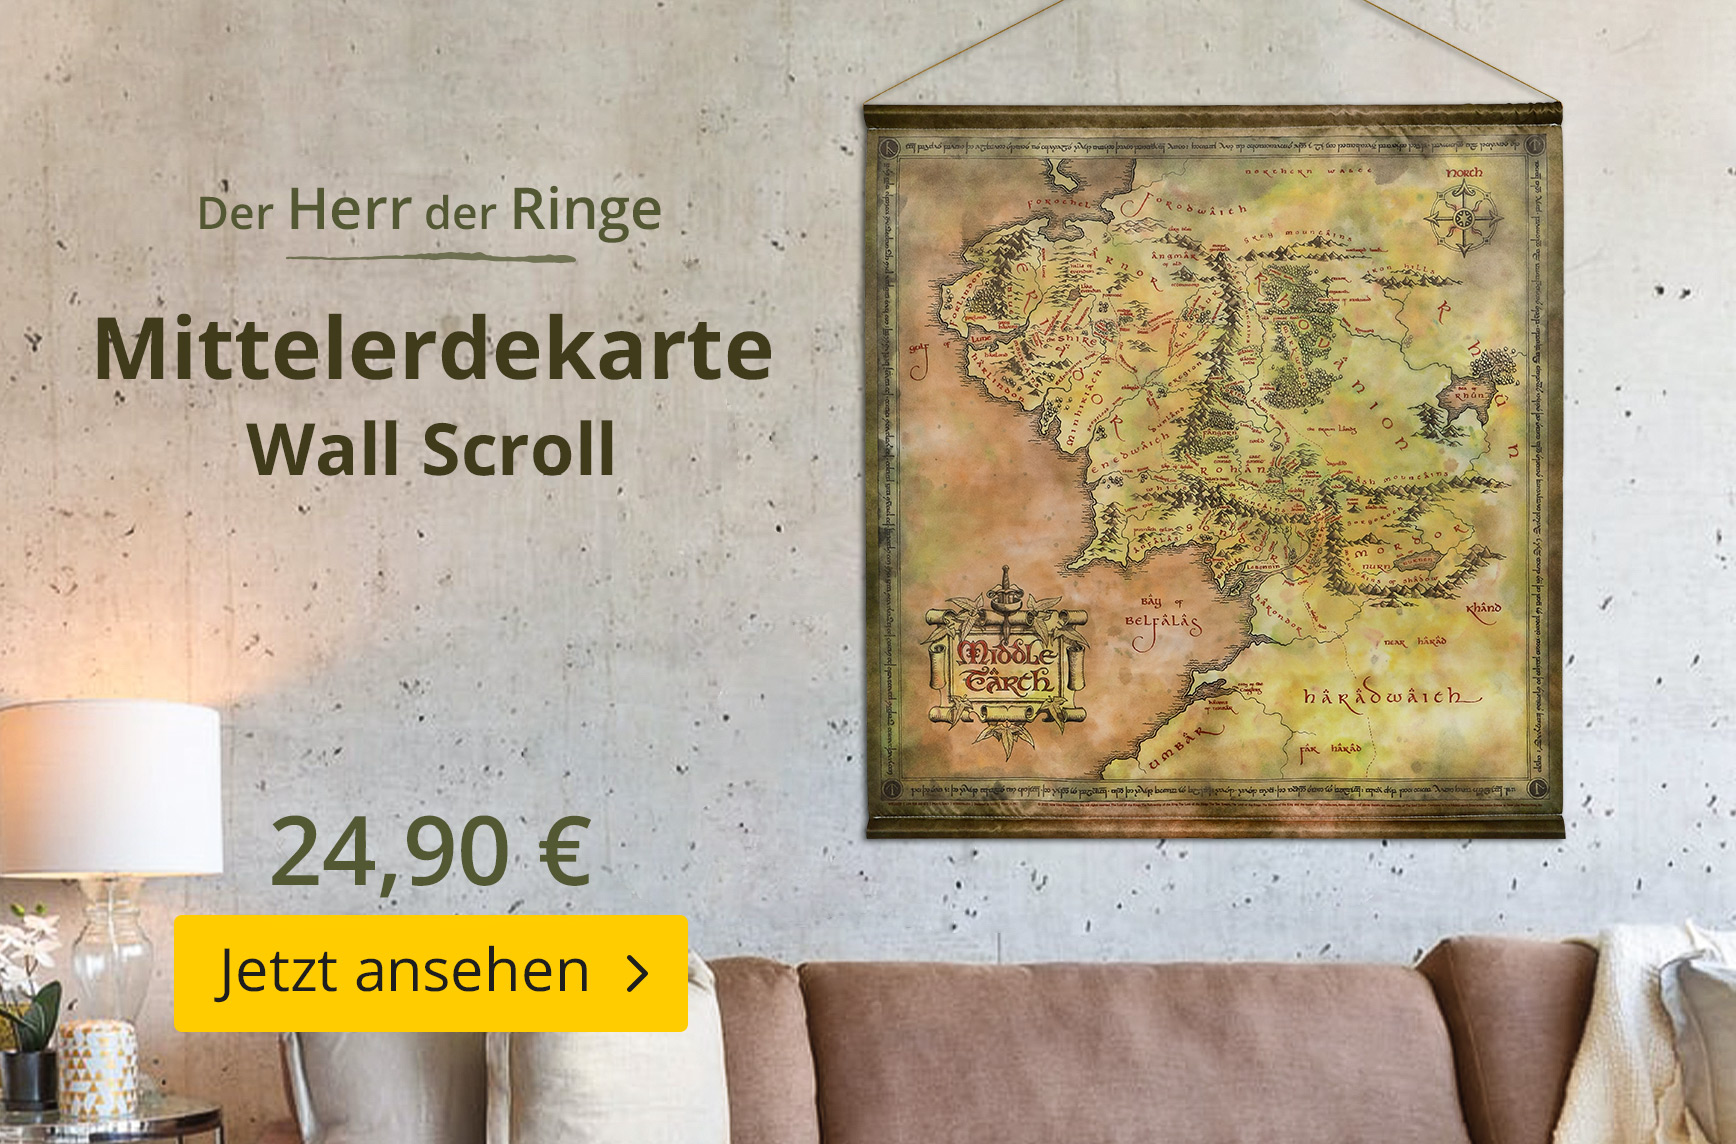 Herr der Ringe - Mittelerdekarte Wall Scroll - 24,90 EUR